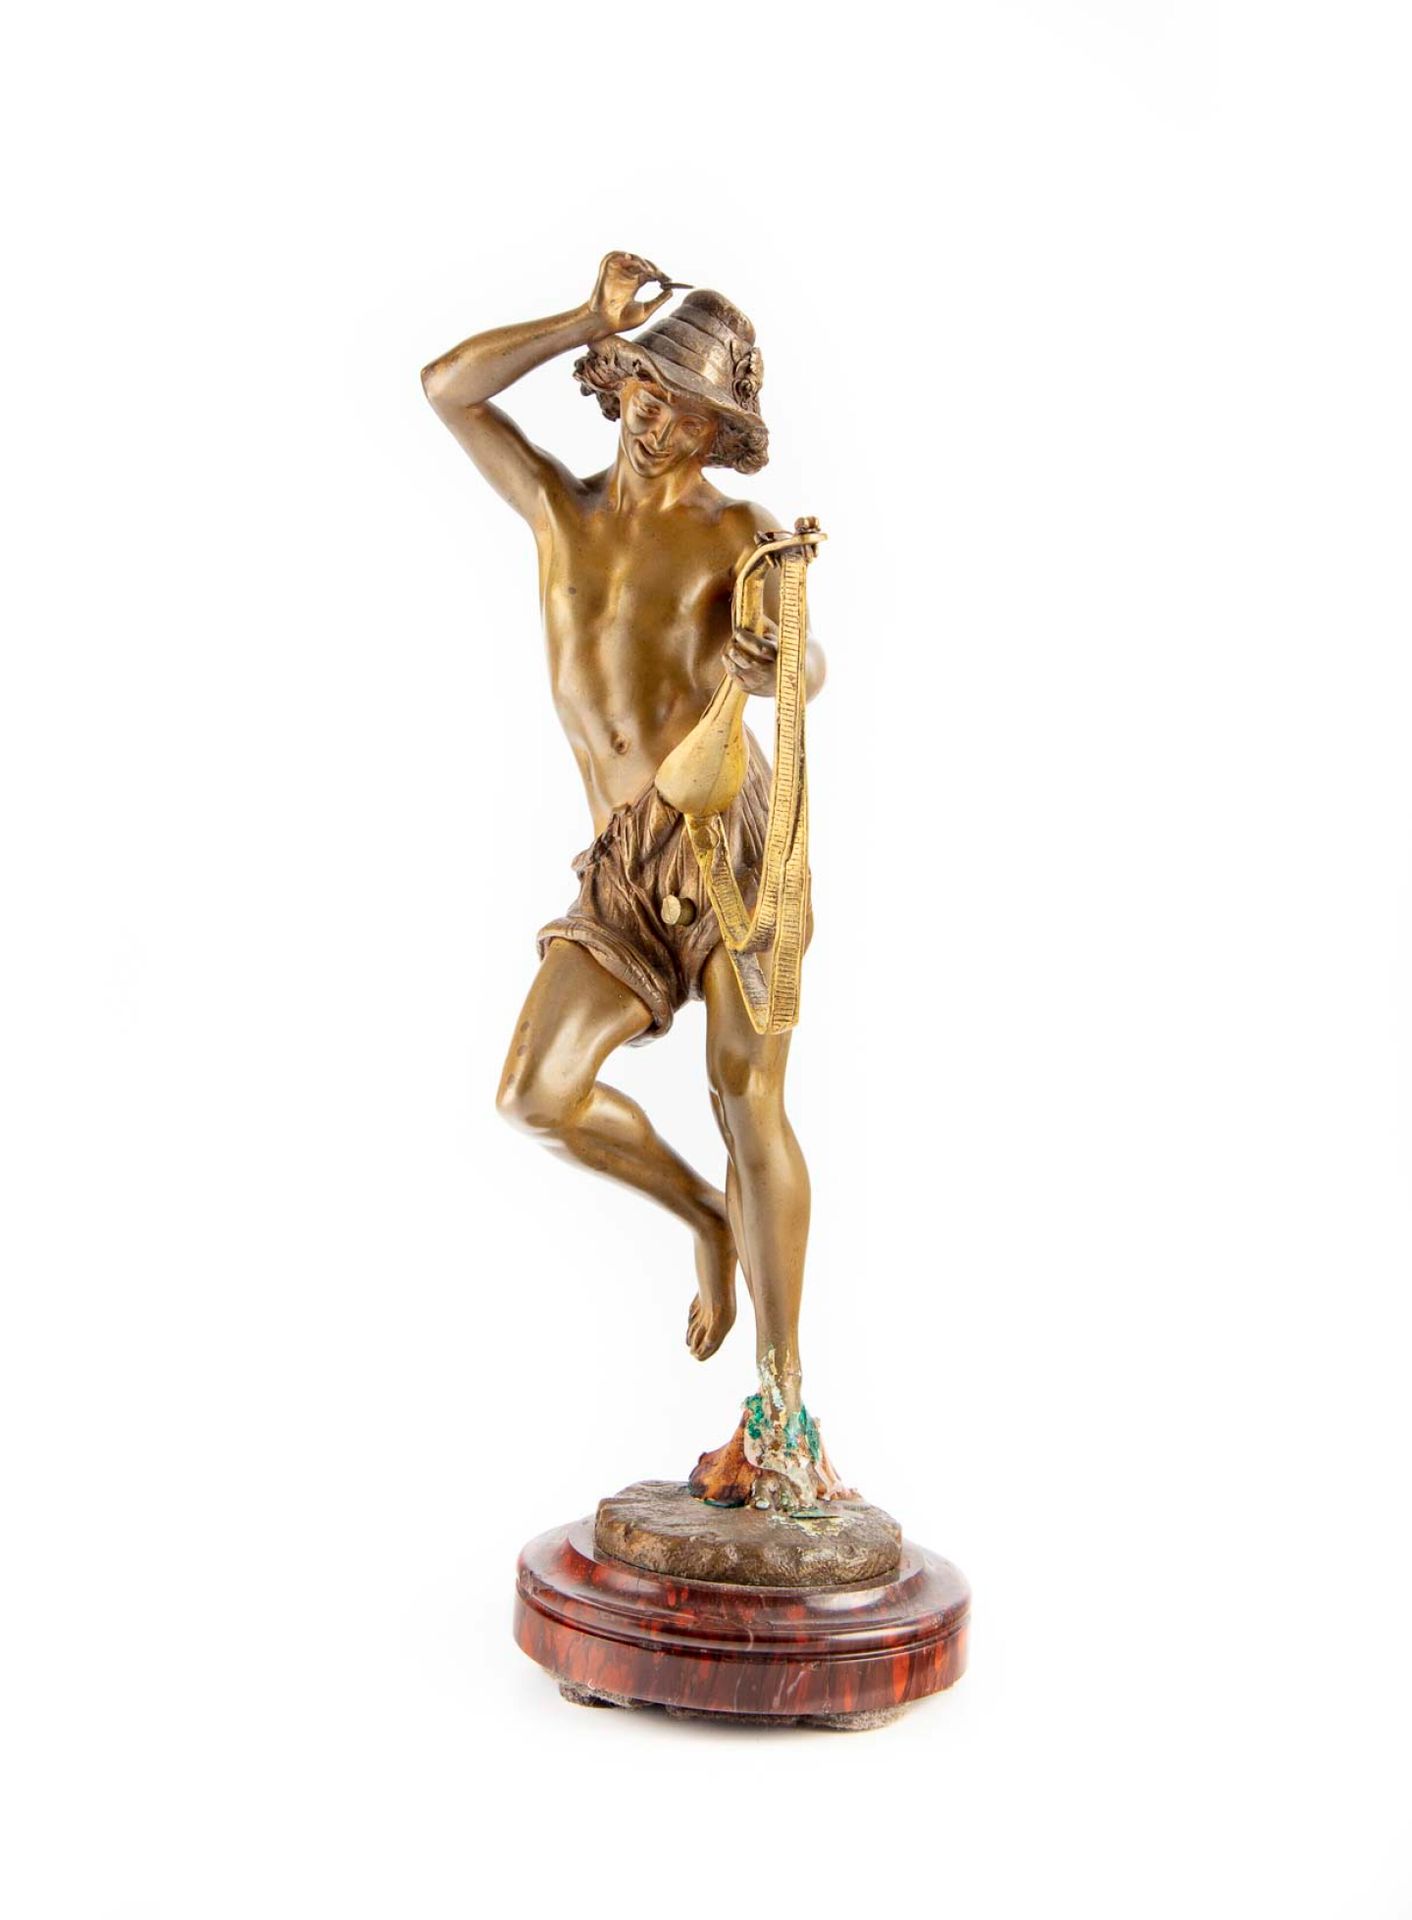 CARRIER-BELLEUSE 阿尔伯特-欧内斯特-卡里尔-贝卢斯(1824-1887)

带曼陀林的那不勒斯舞者，青铜，带褐色铜锈

青铜器，平台上有 "A&hellip;